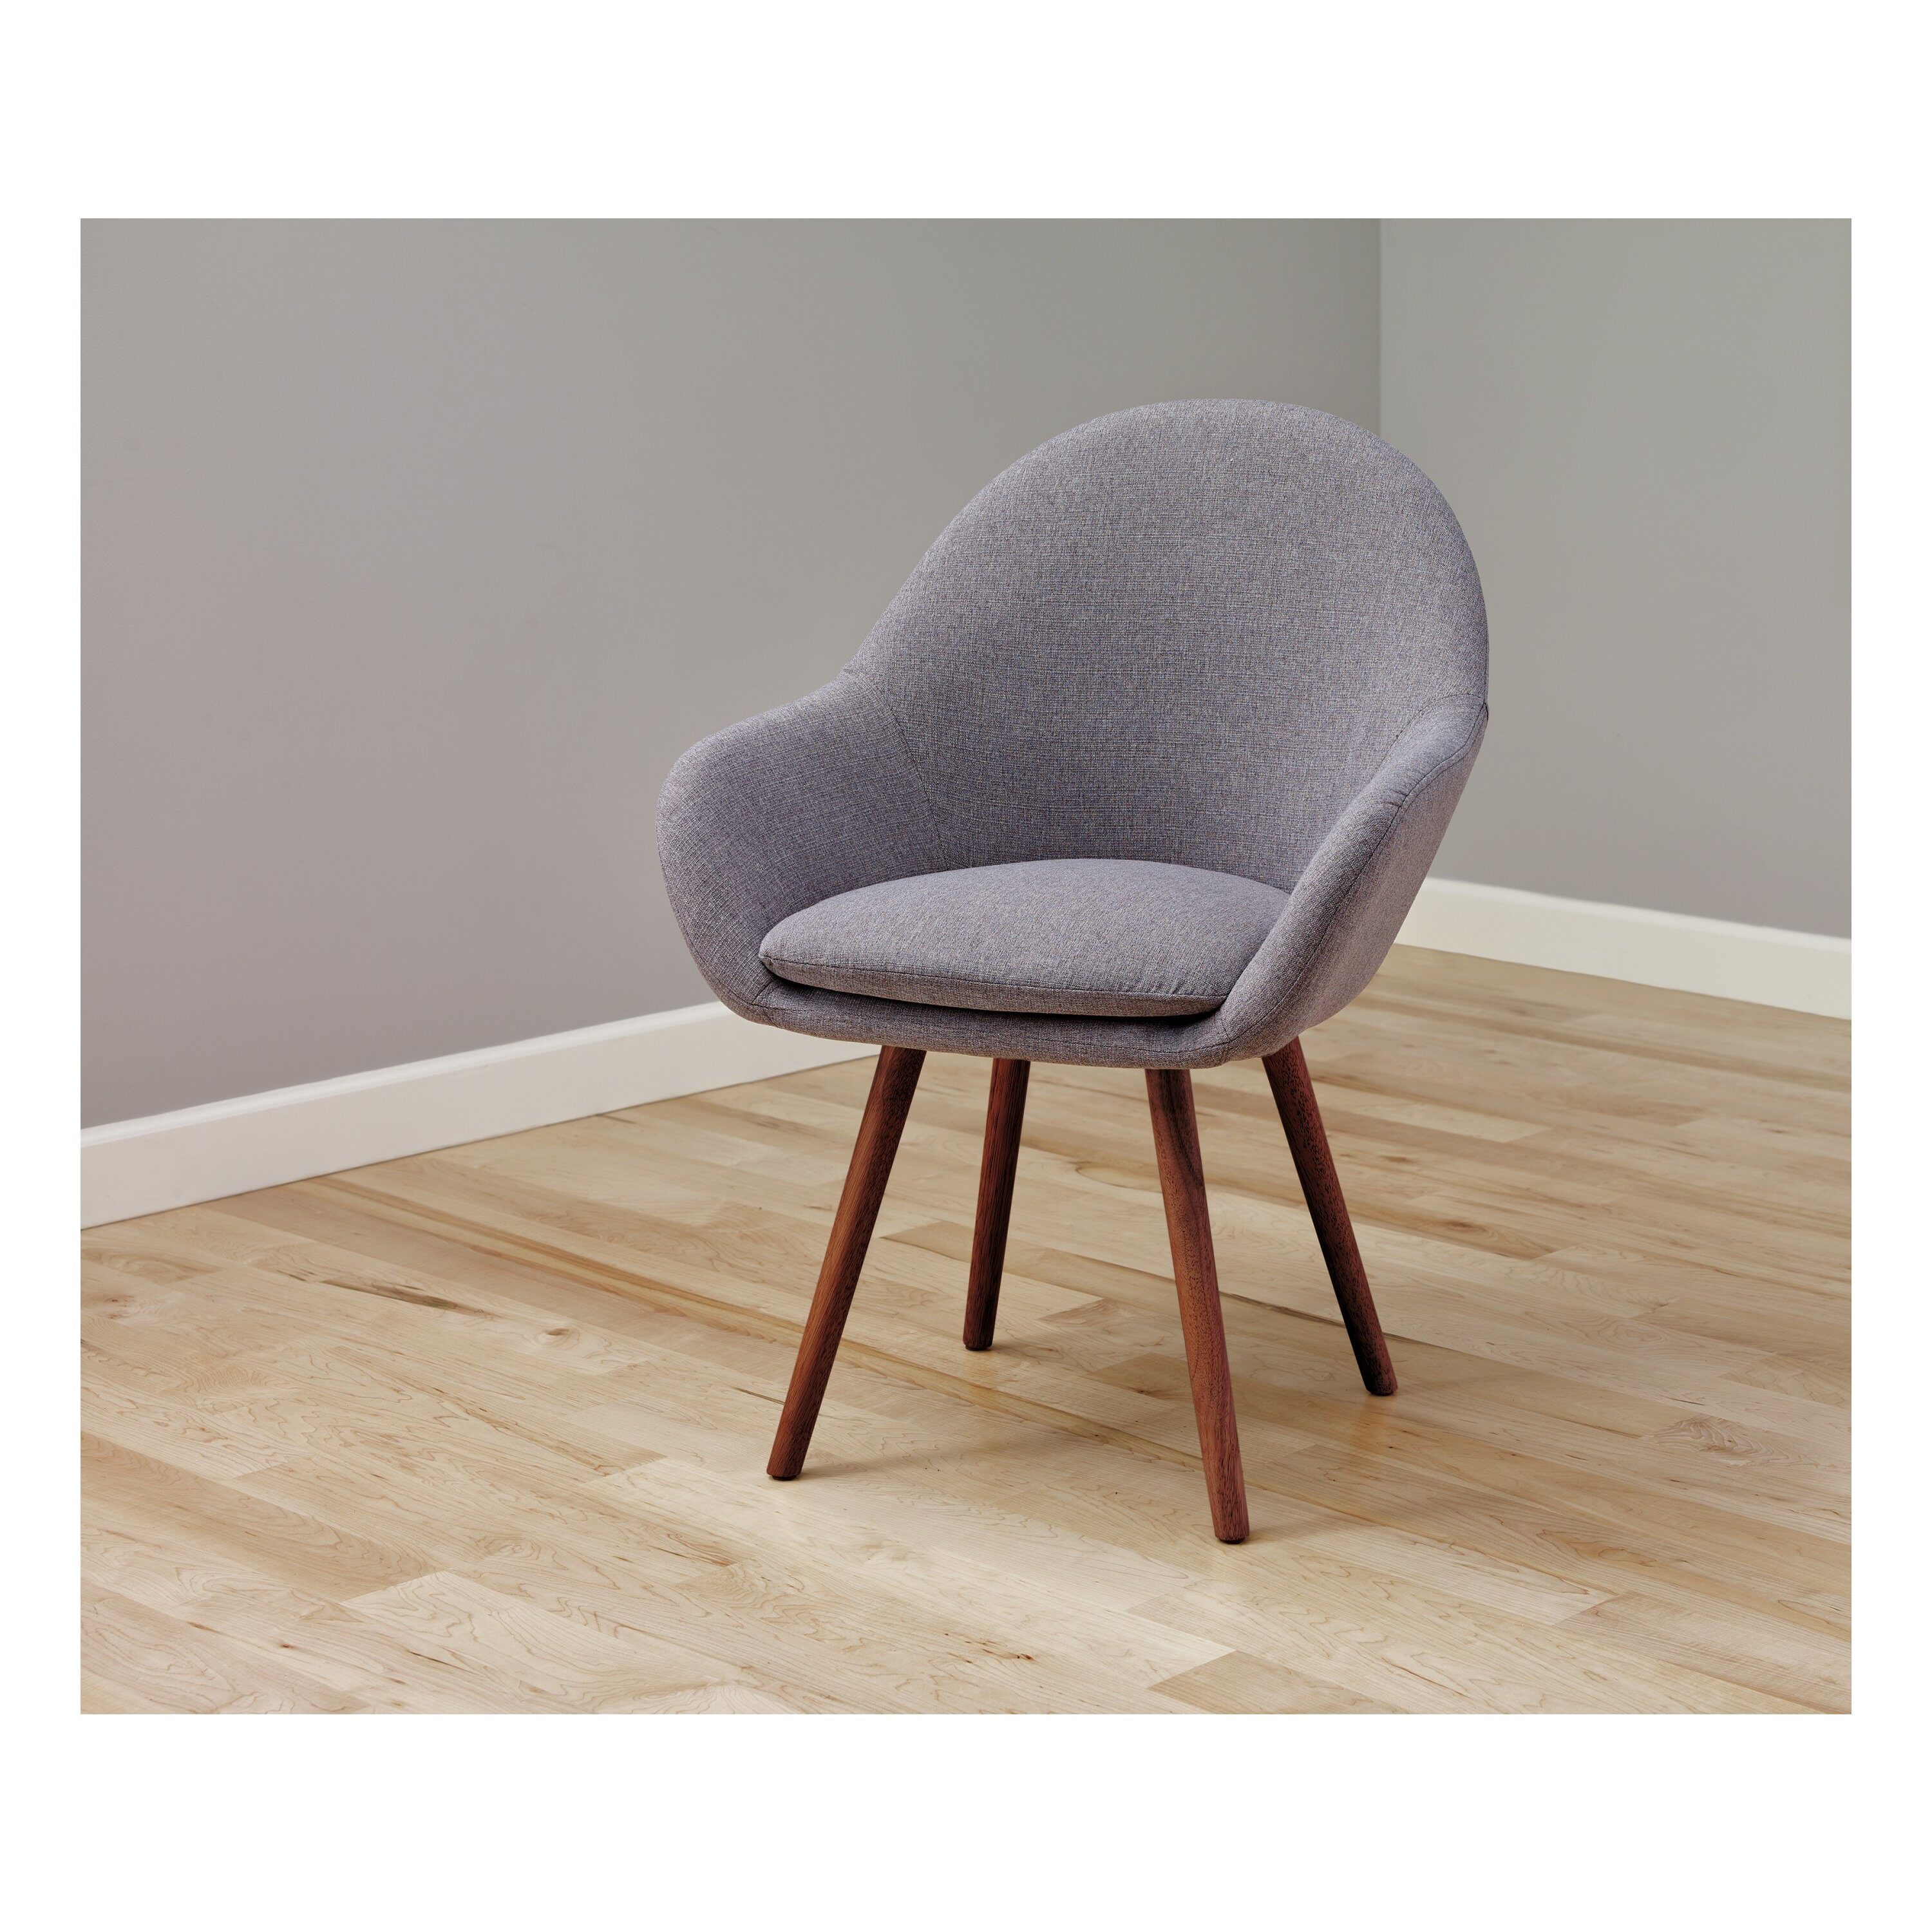 8 -18pcs Self Adhesive Square Felt Pads Chair Table Leg Floor